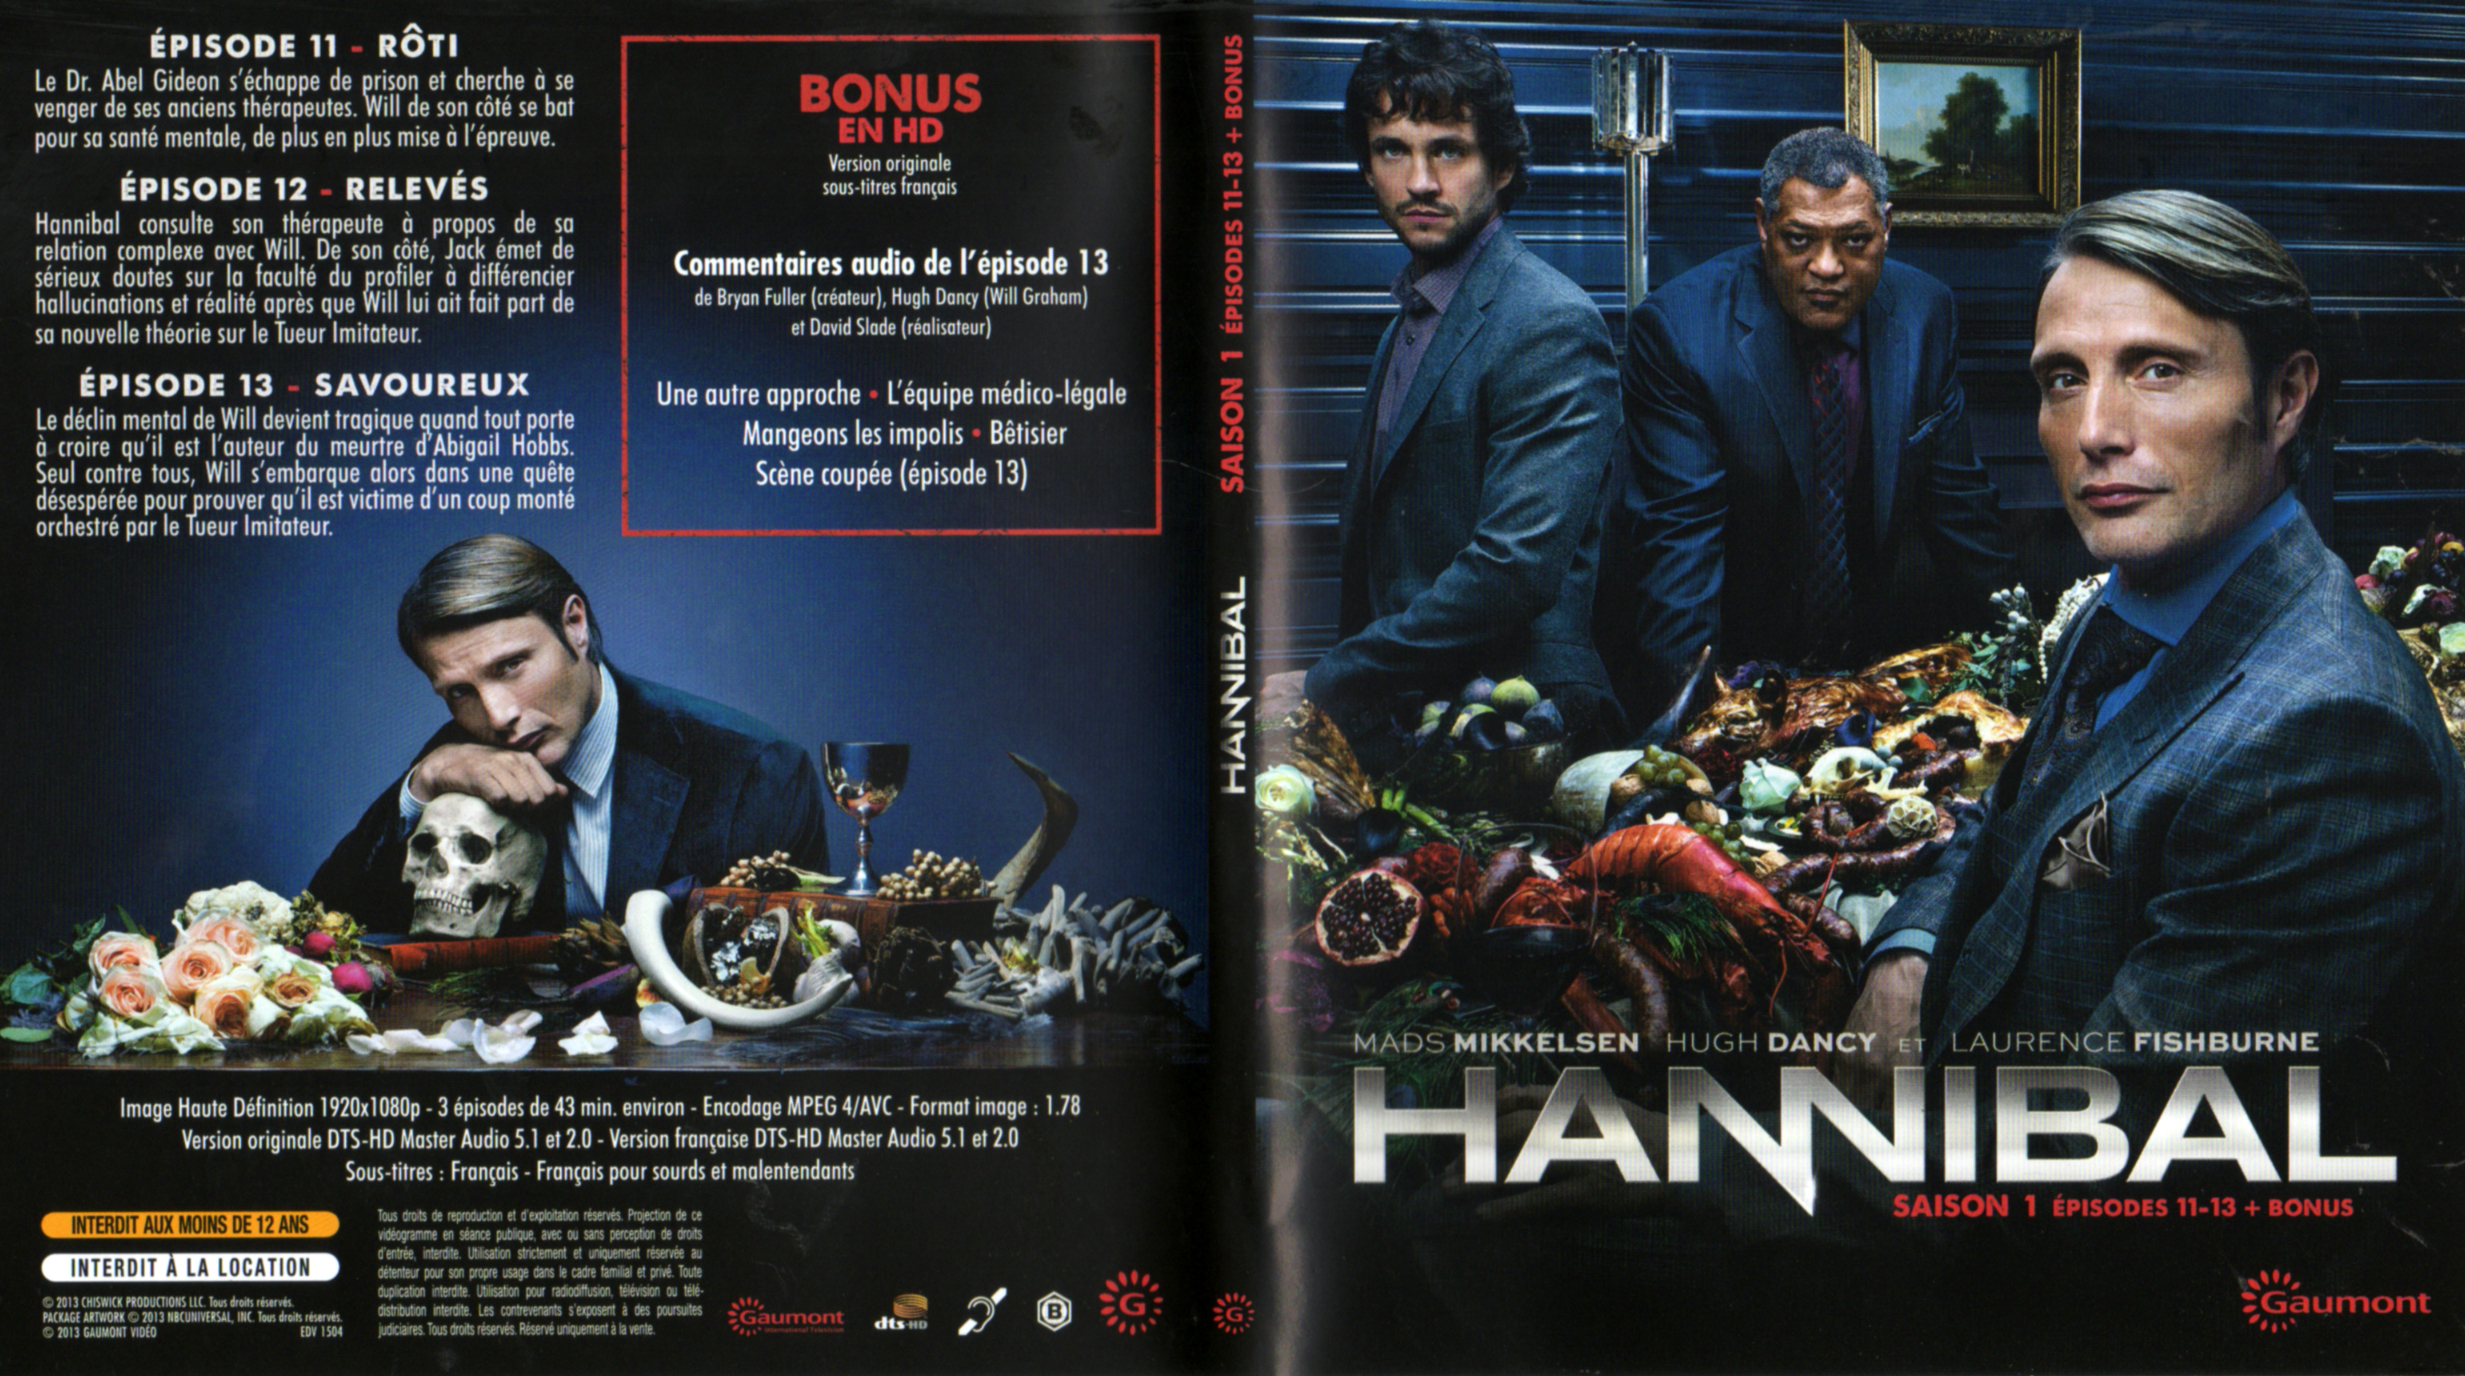 Jaquette DVD Hannibal Saison 1 Ep 11-13 (BLU-RAY)